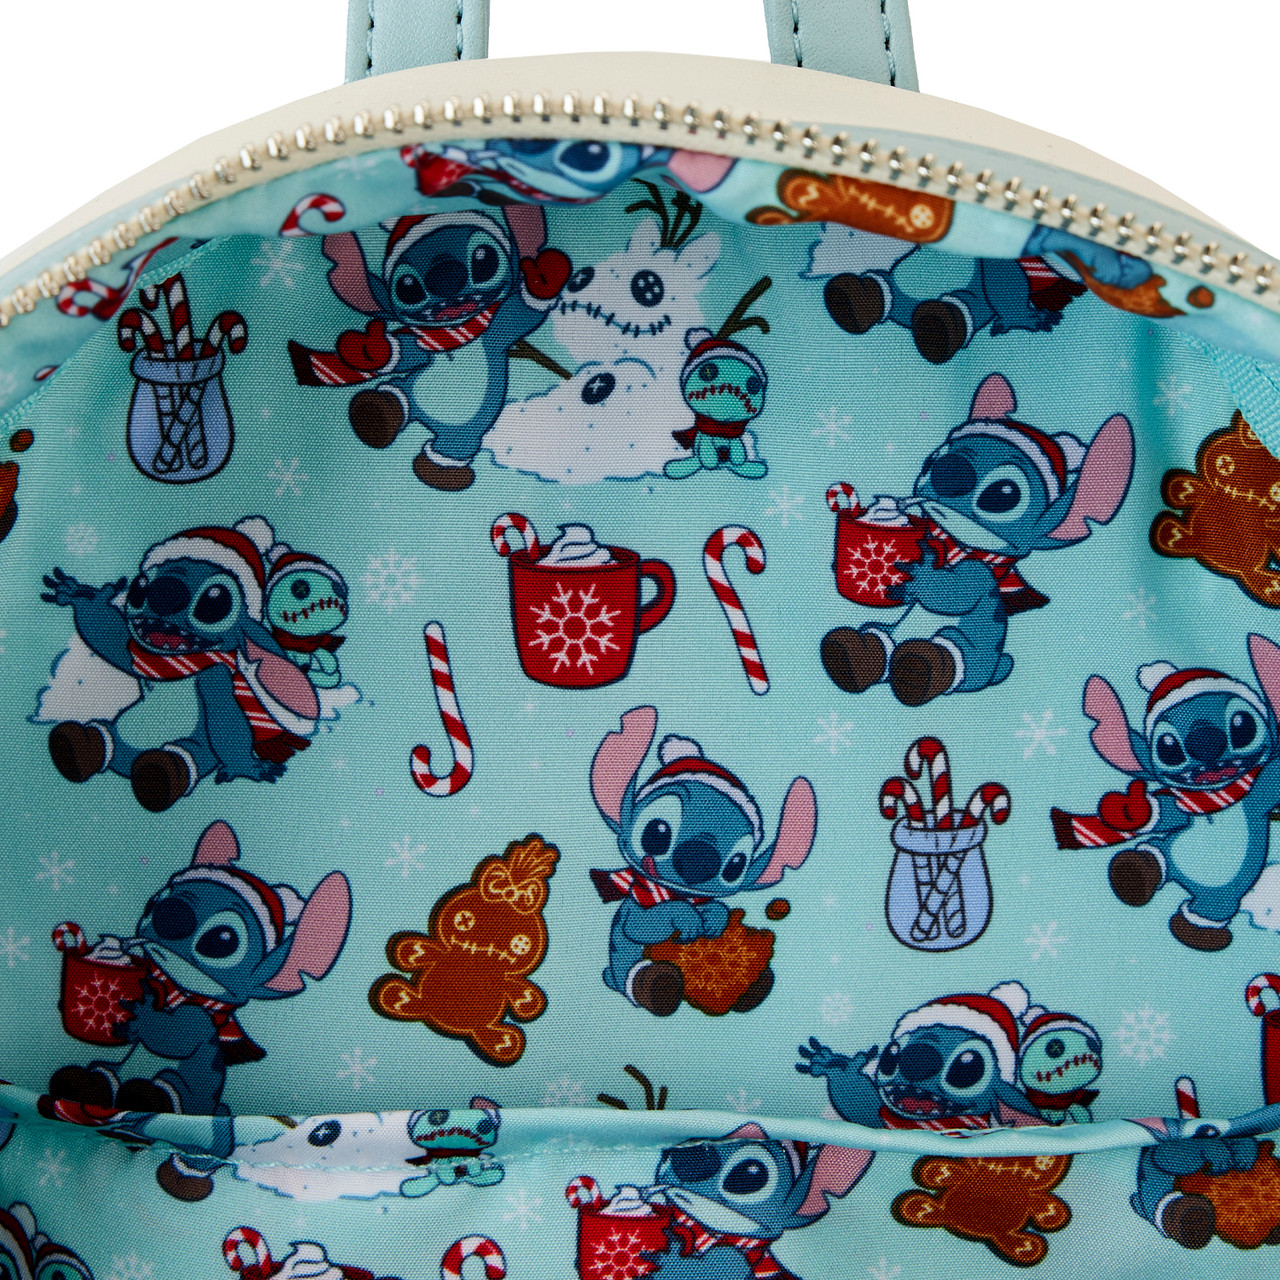  Loungefly Disney Stitch Mini Backpack